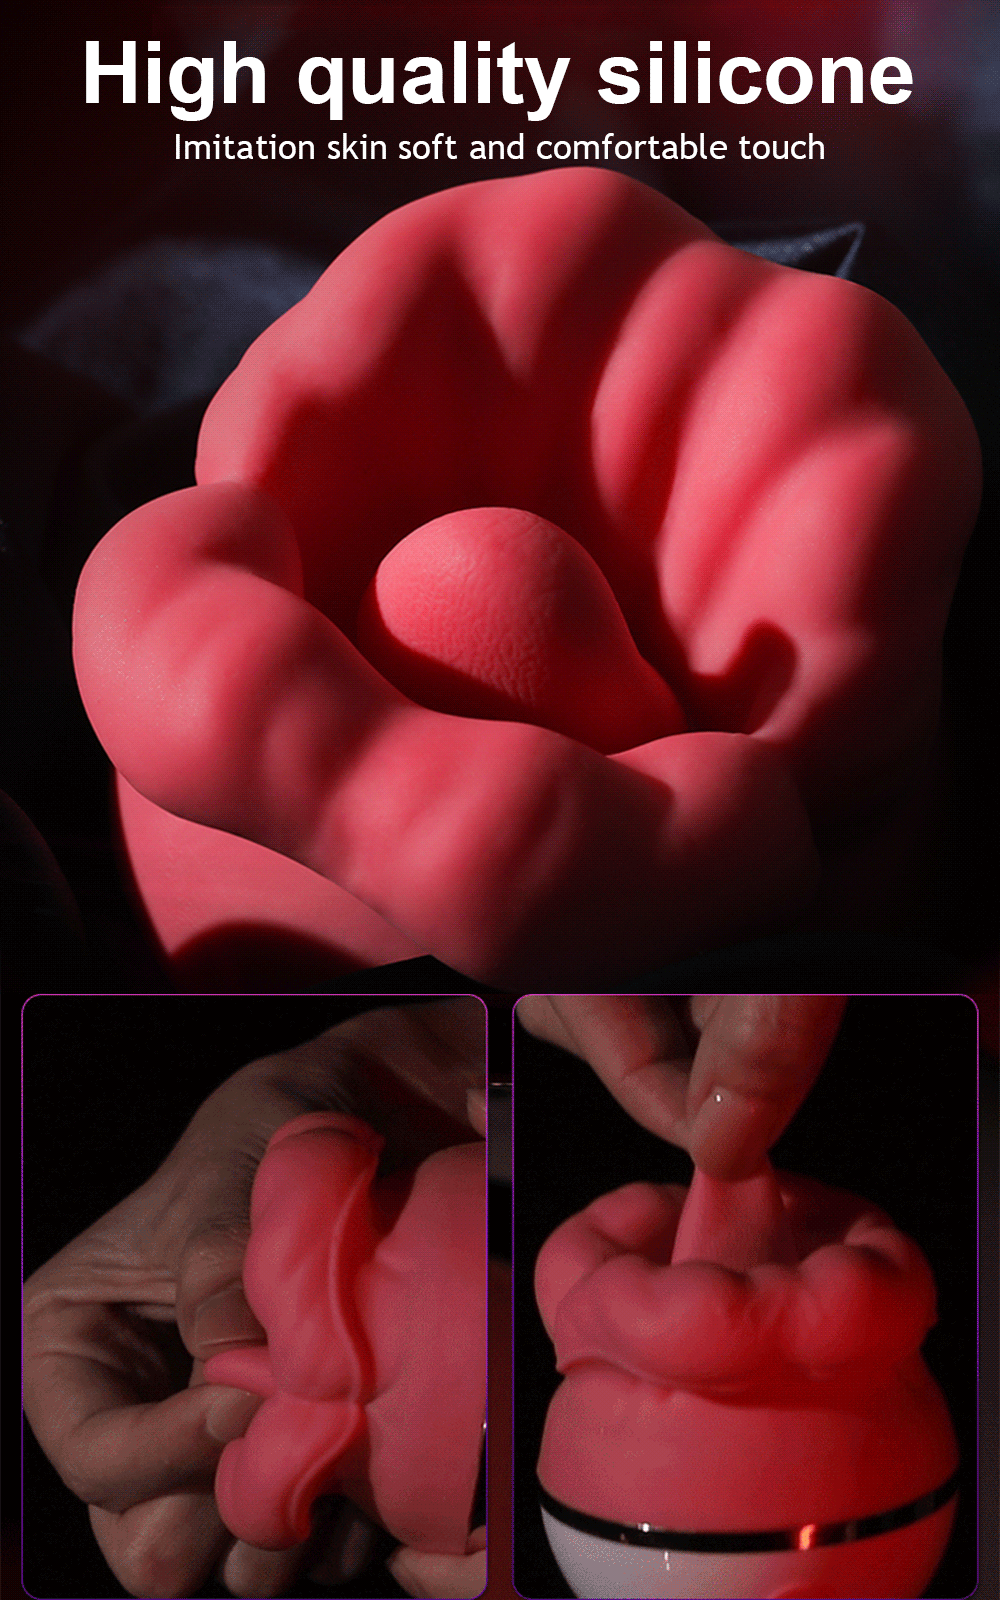 Rose Sucking Licking Vibrator For Women Clitoris Nipples Stimulator Vagina Masturbators Massager Silicone Female Adult Sex Toys